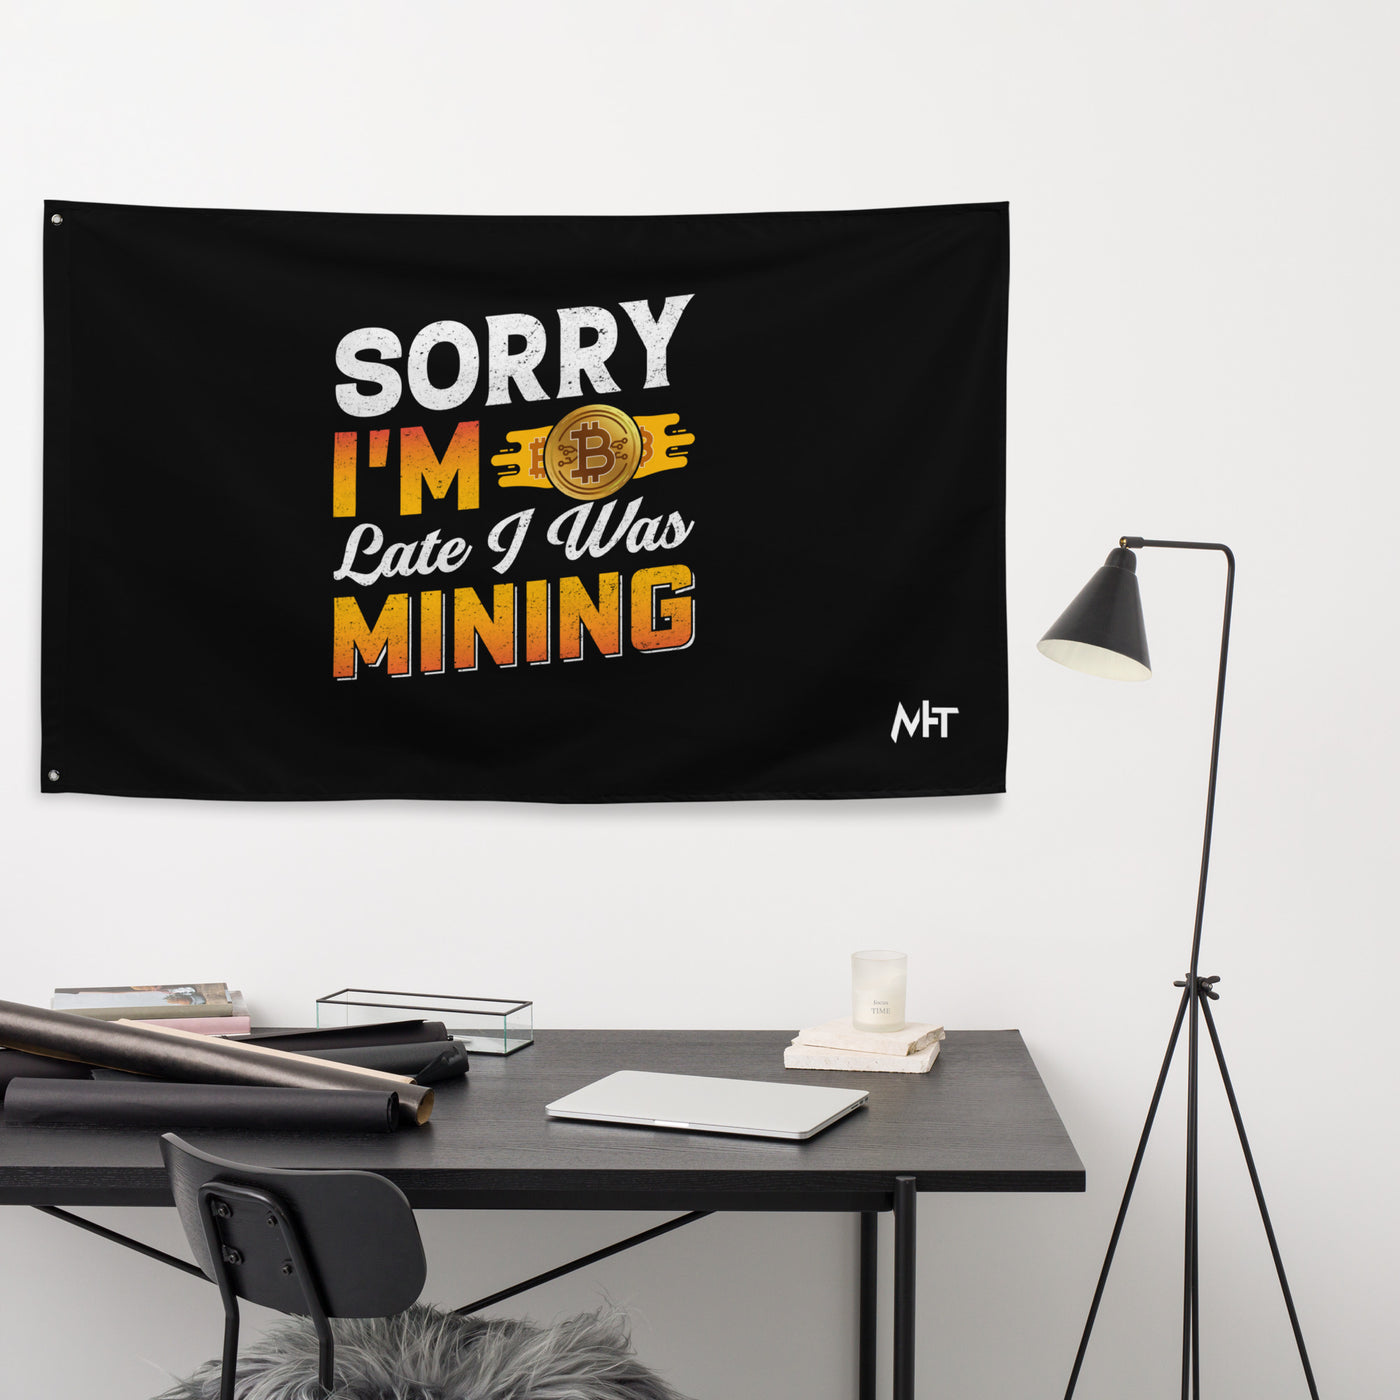 Sorry I am Late I was Bitcoin Mining -  Flag